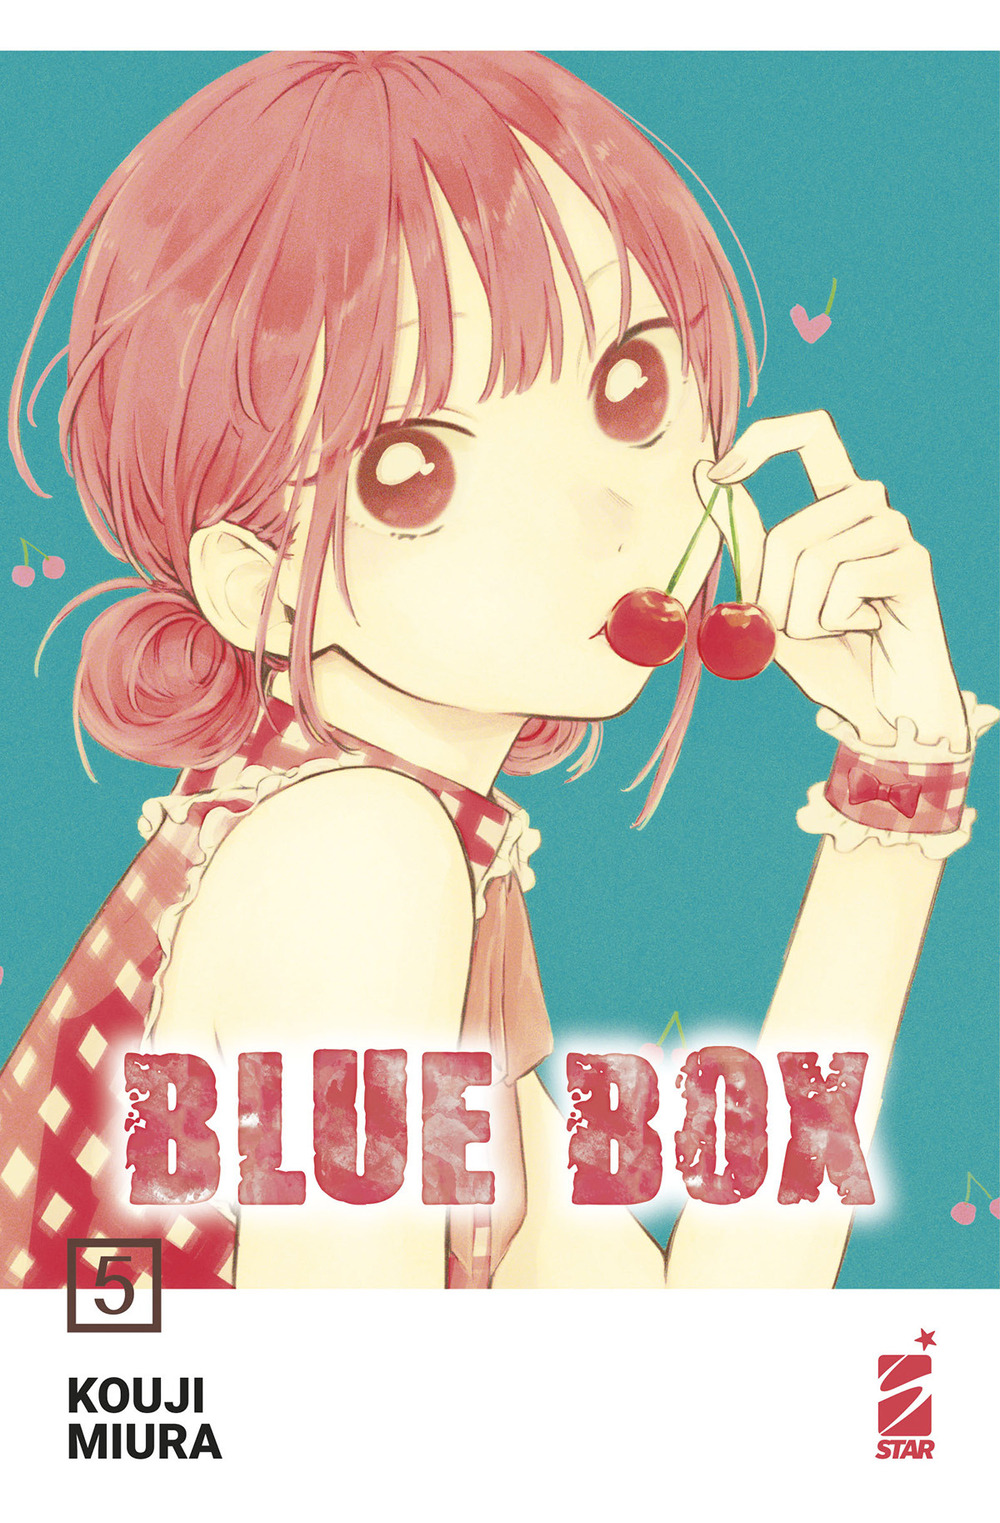 Blue box. Vol. 5